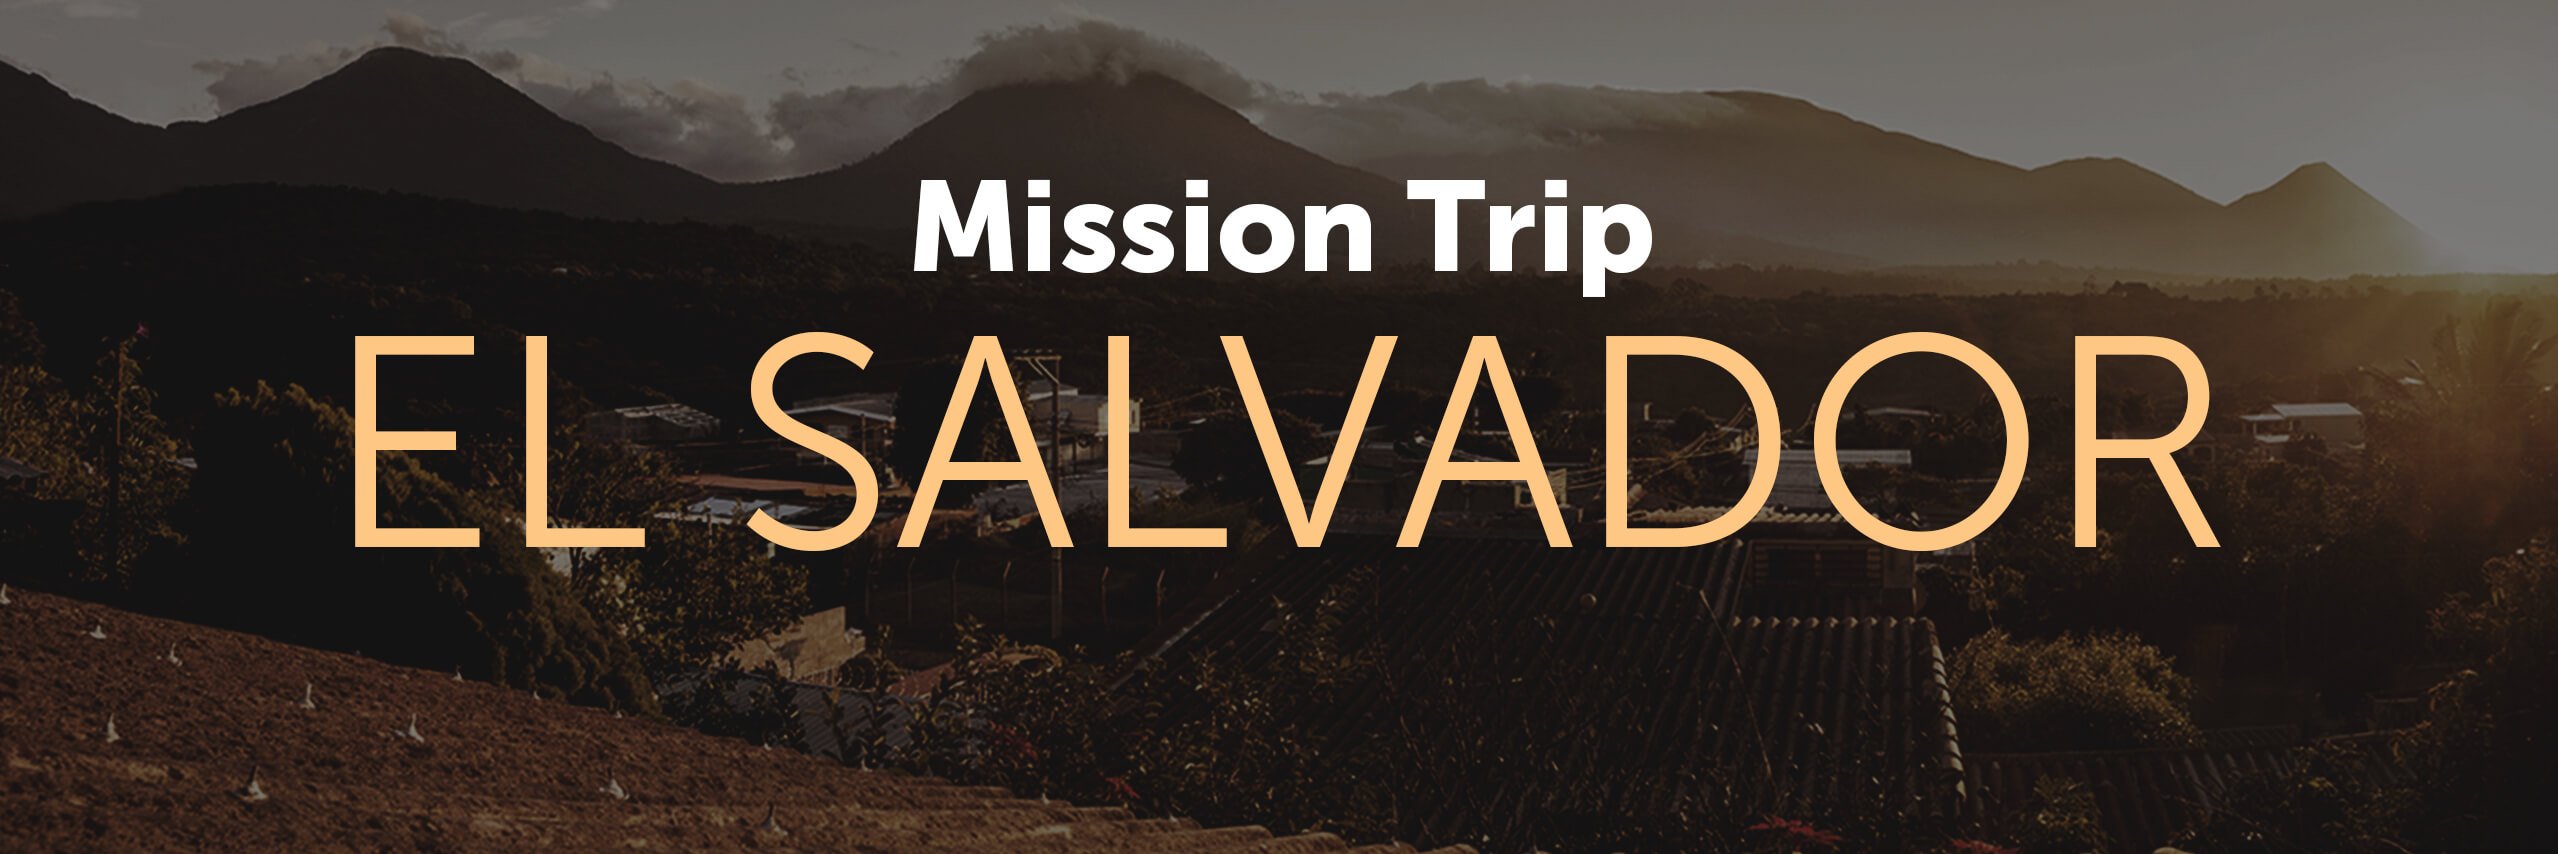 Mission Trip El Salvador